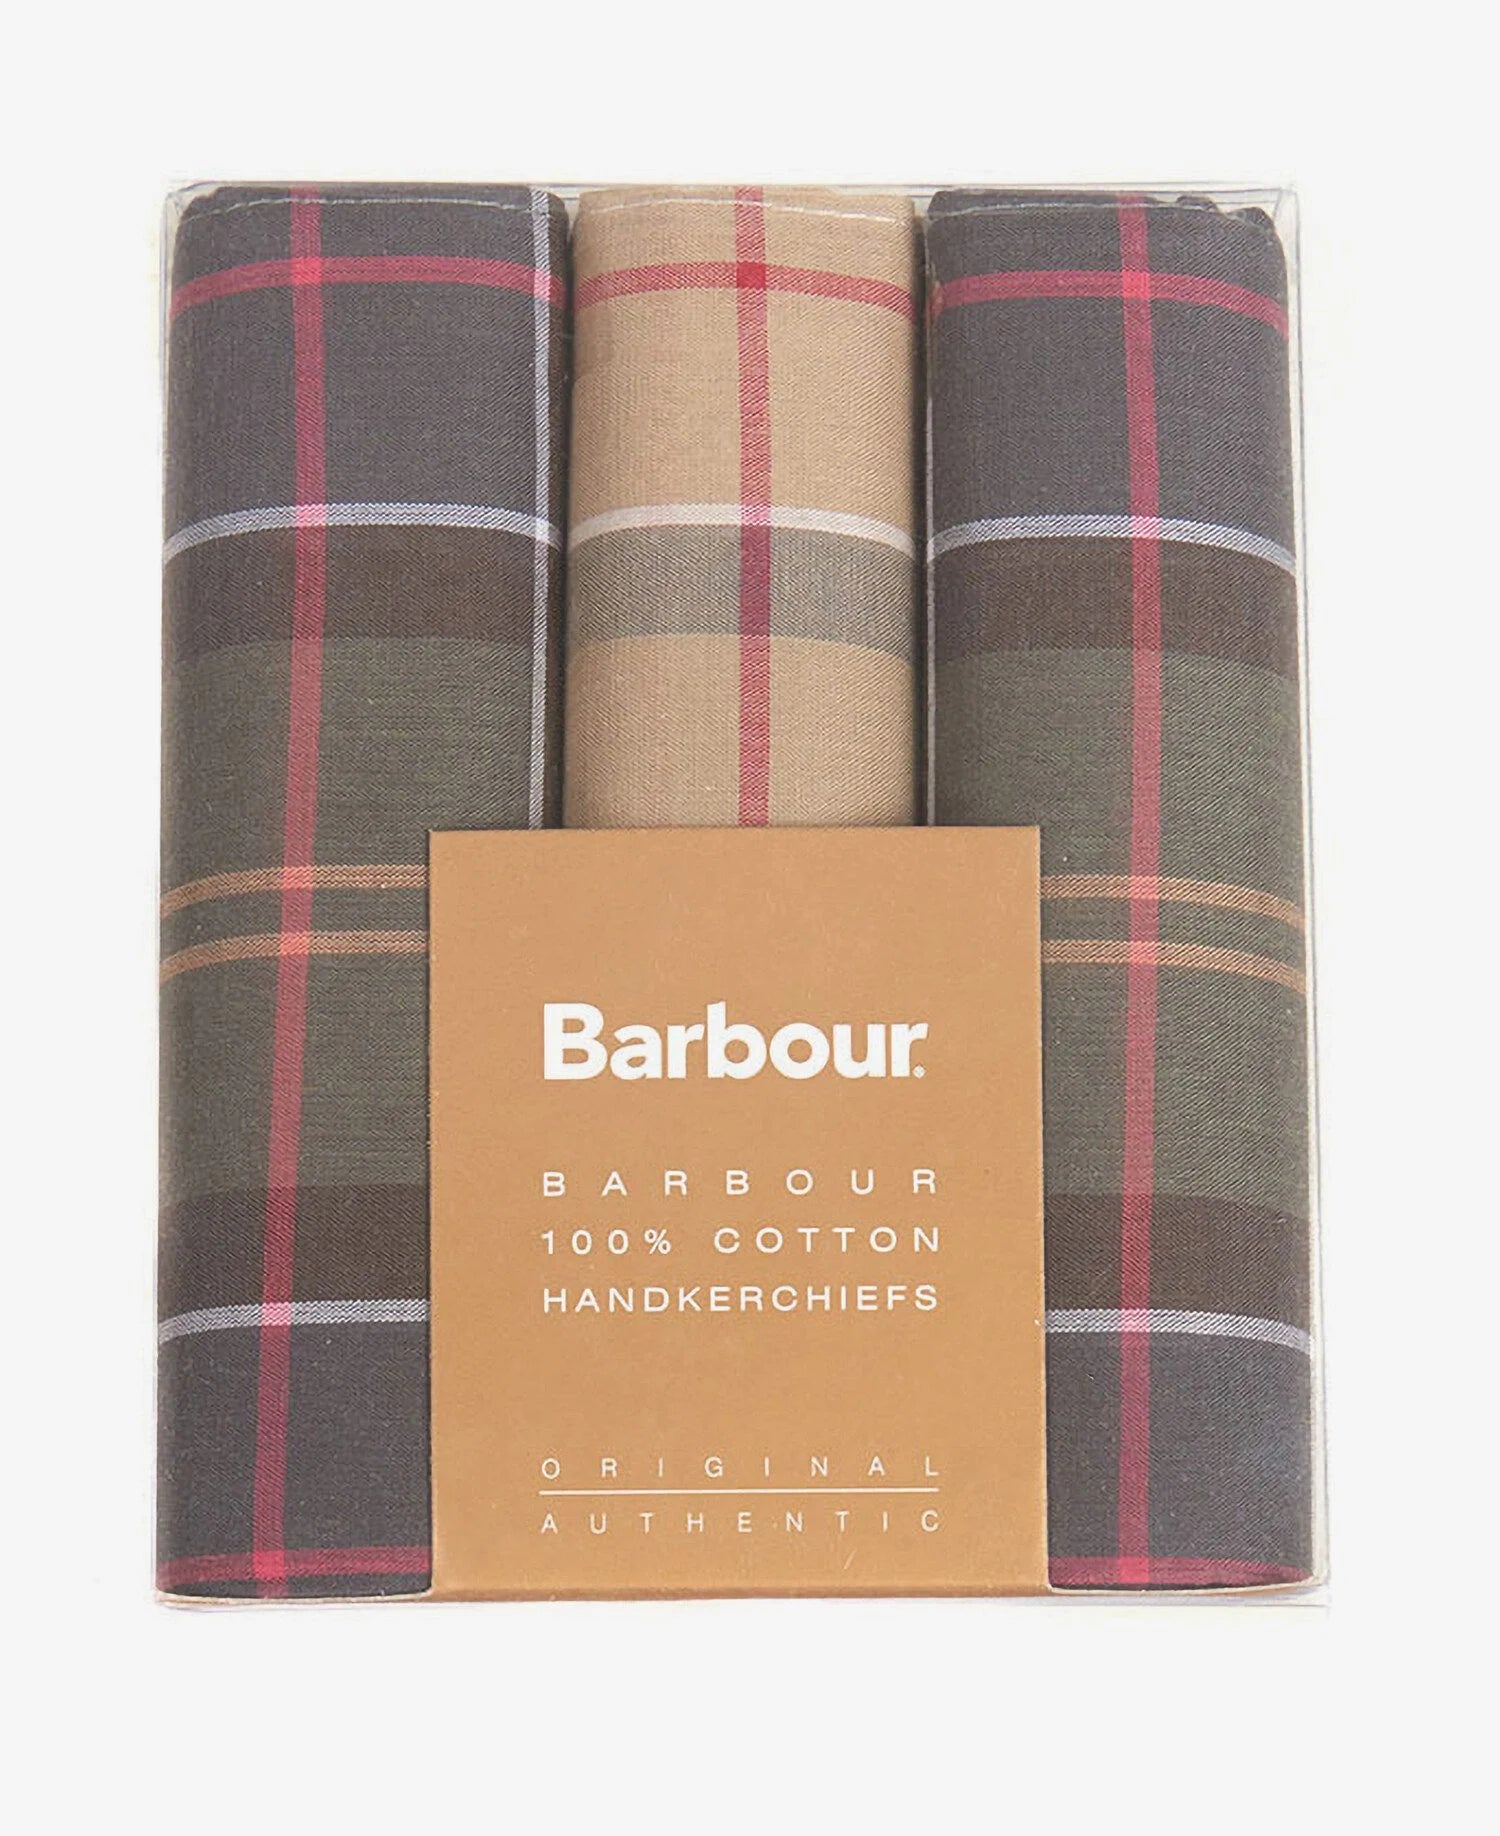 Barbour Tartan Handkerchief 3 Pack - Classic Tartans